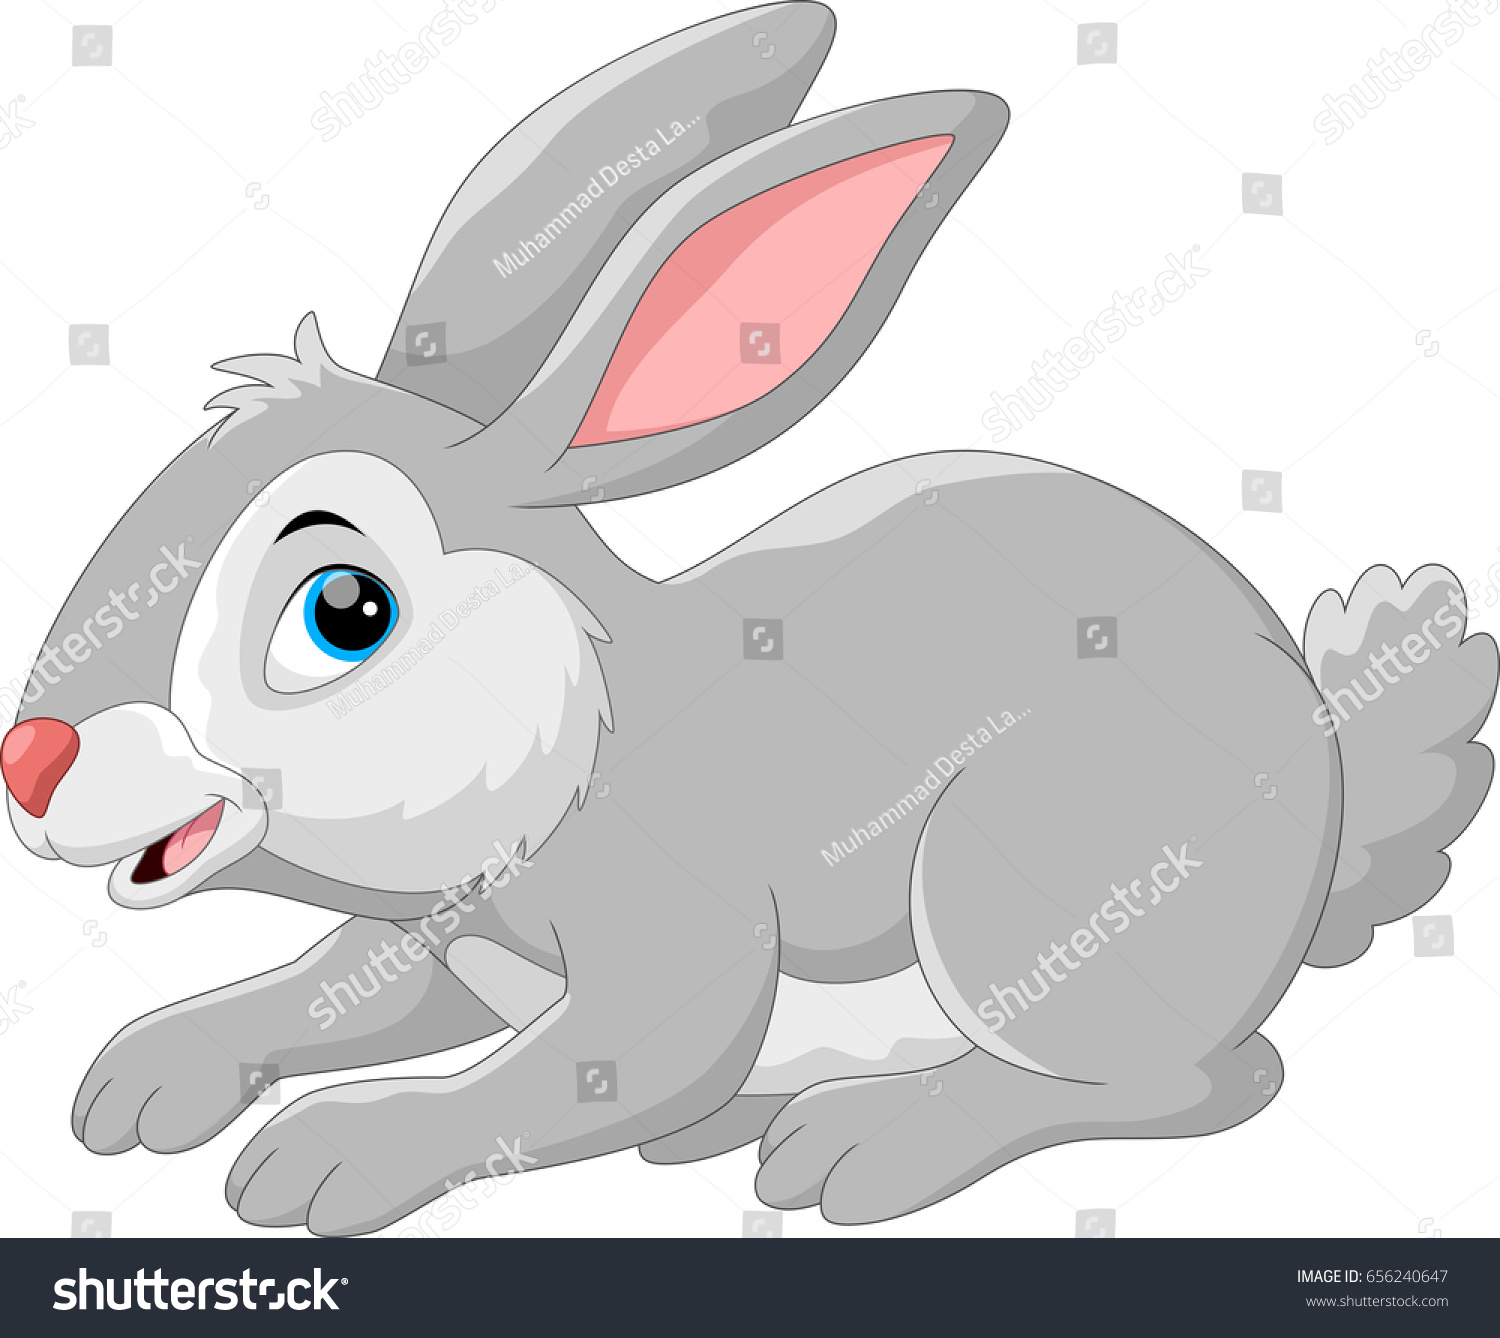 Cute Rabbit Cartoon Stock Vector (Royalty Free) 656240647 - Shutterstock